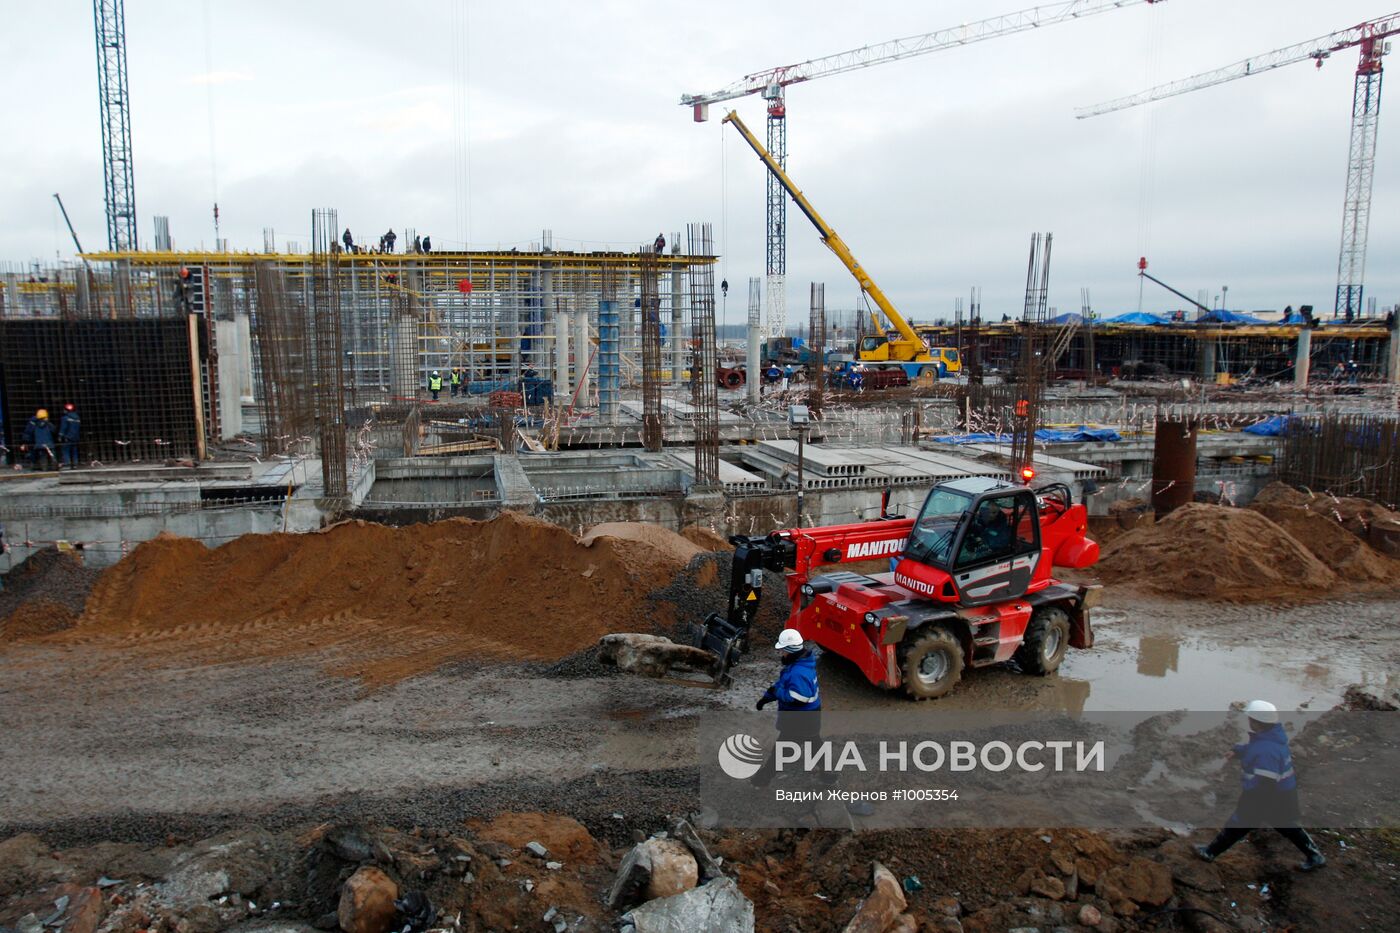 Строительство нового терминала "Пулково"